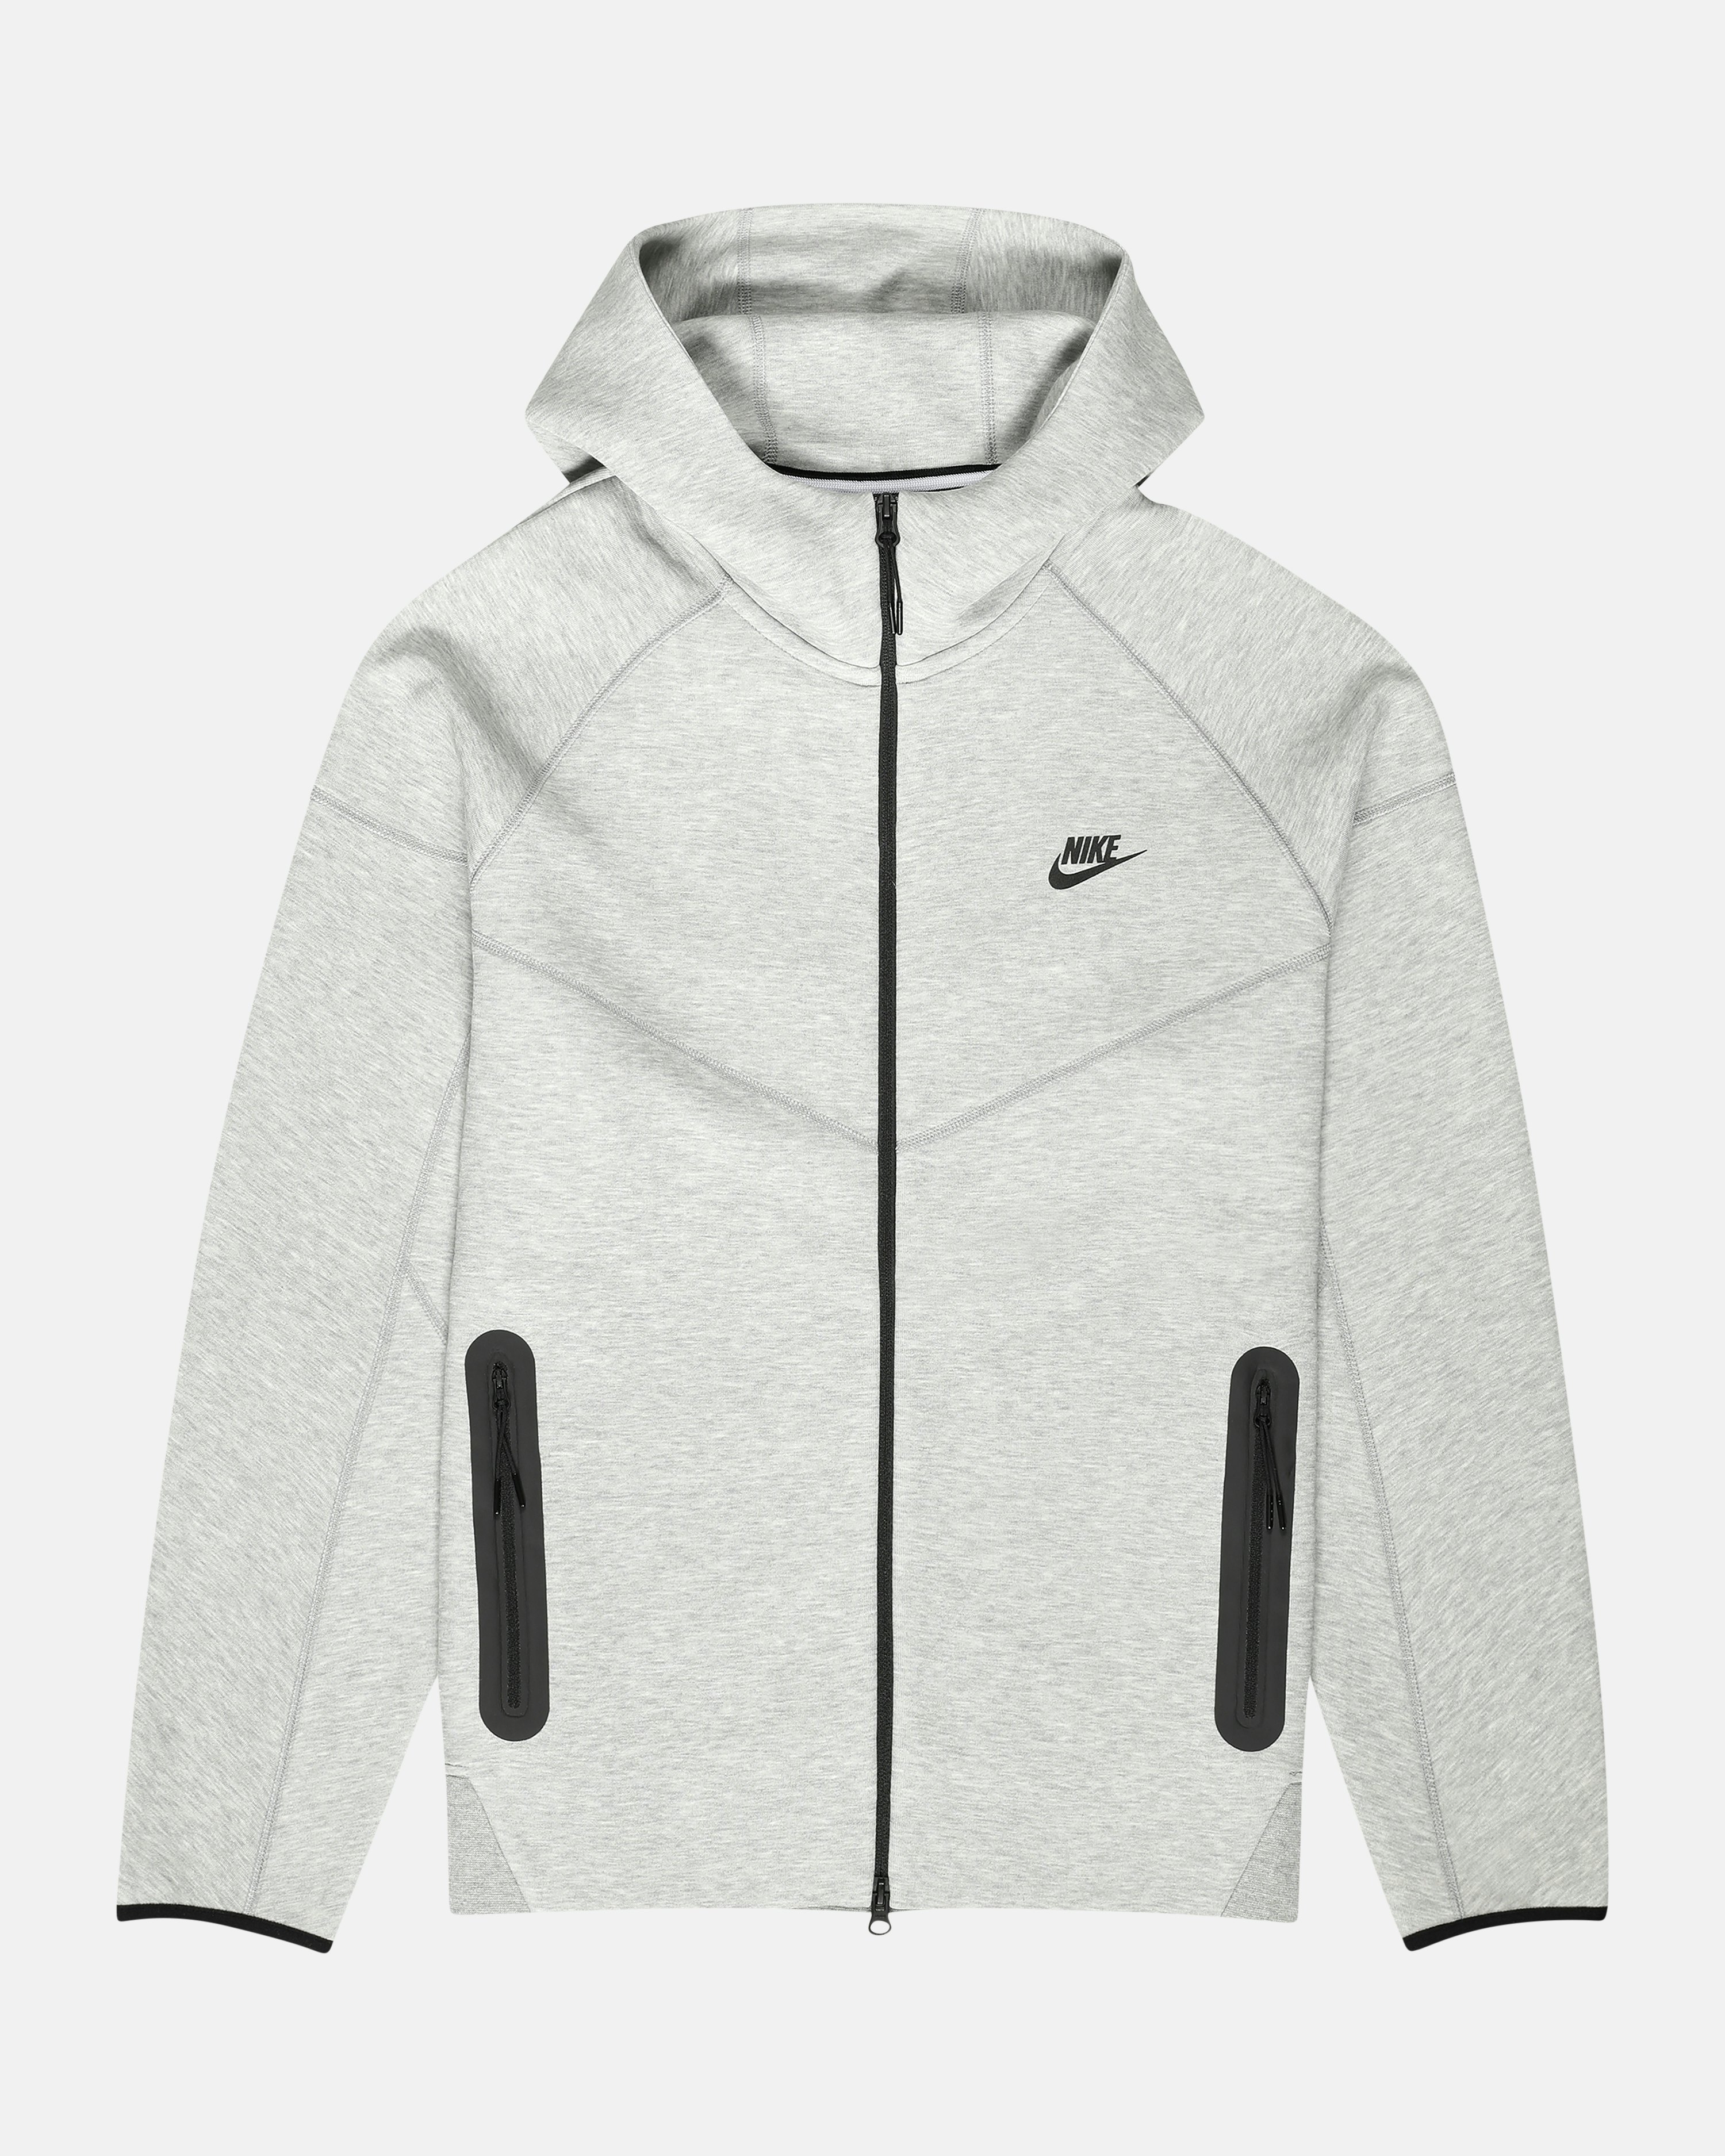 Nike Tech Fleece Jacket Light grey, Unisex